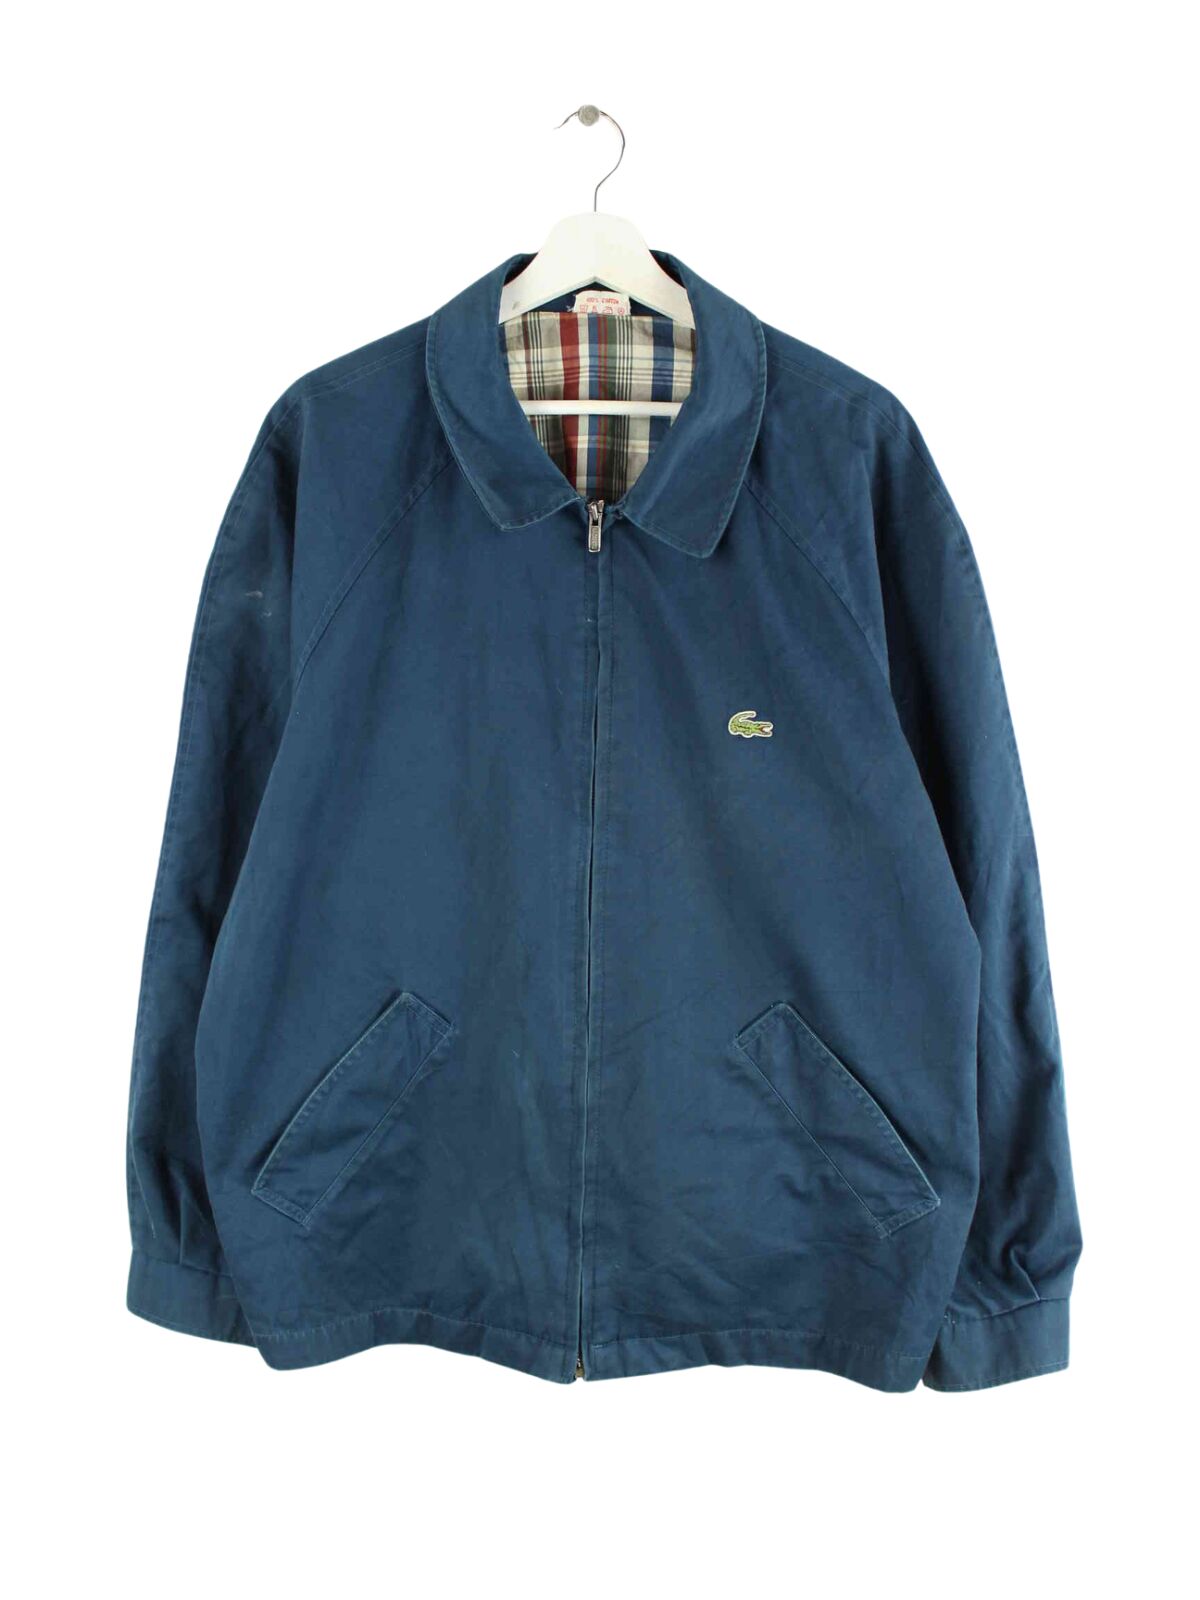 Lacoste 90s Vintage Harrington Jacke Blau L (front image)